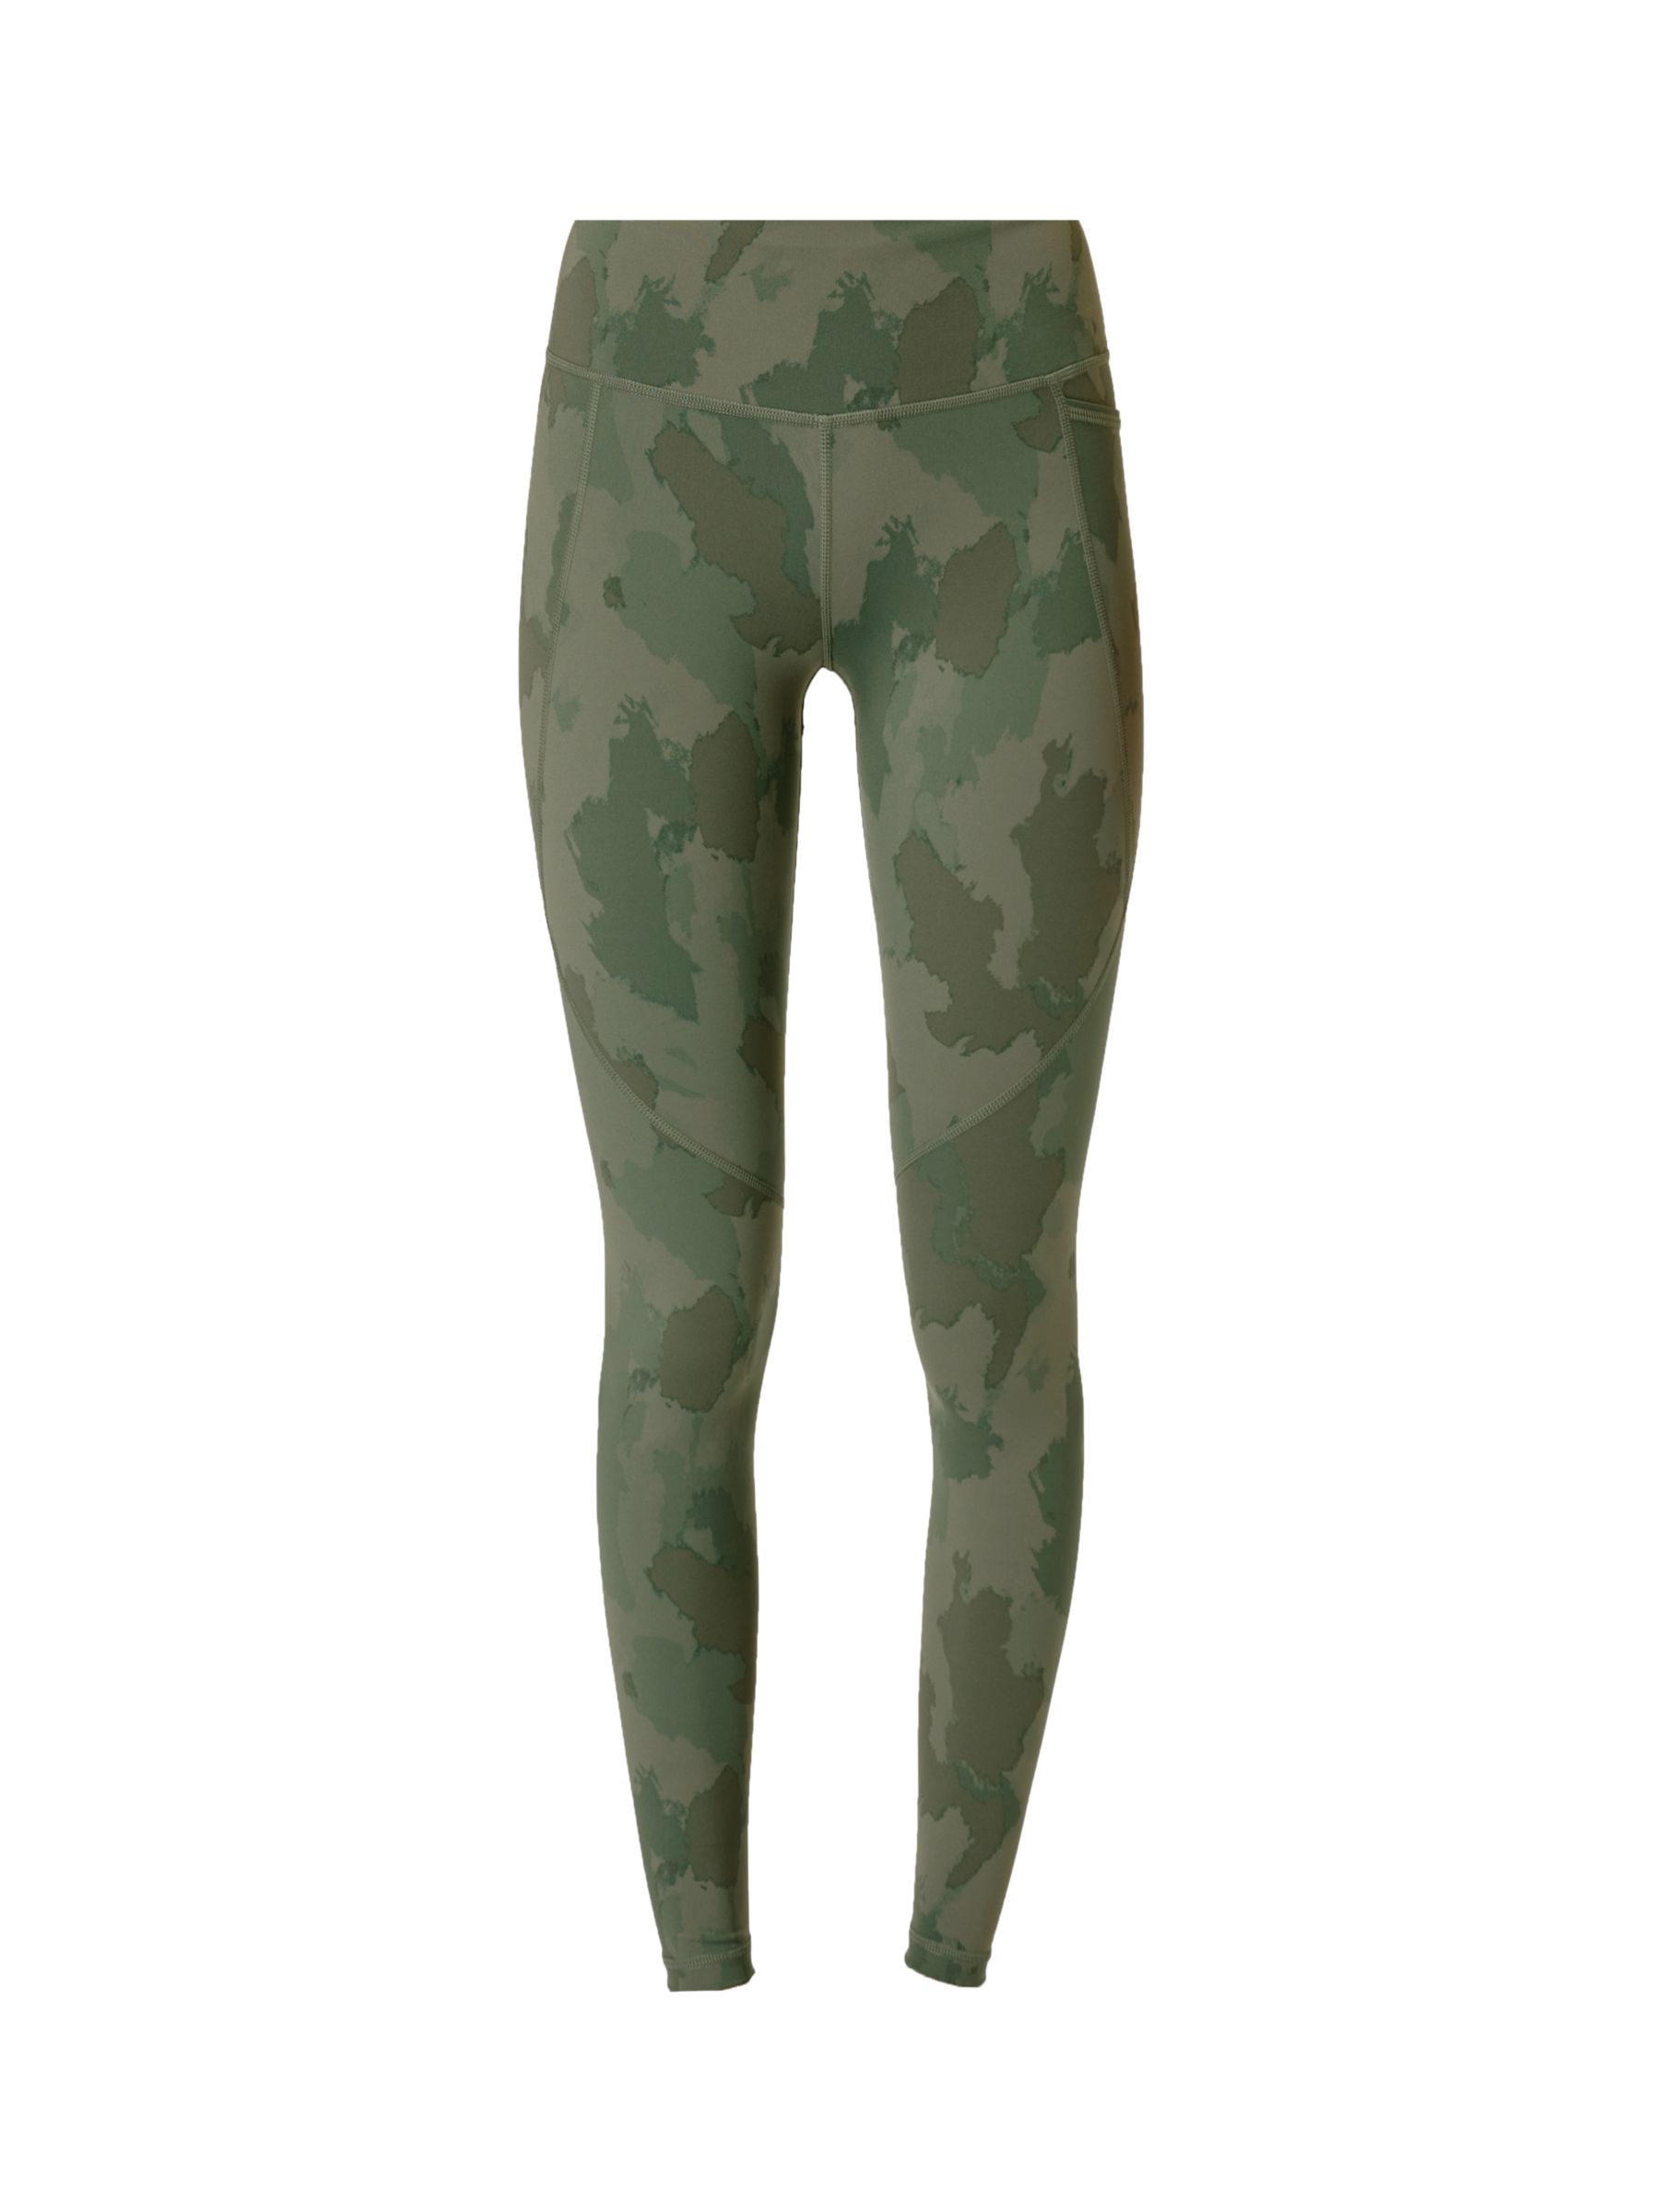 Women Girls Military Camouflage Khaki Green Camo Skinny Stetch Leggings  Pants